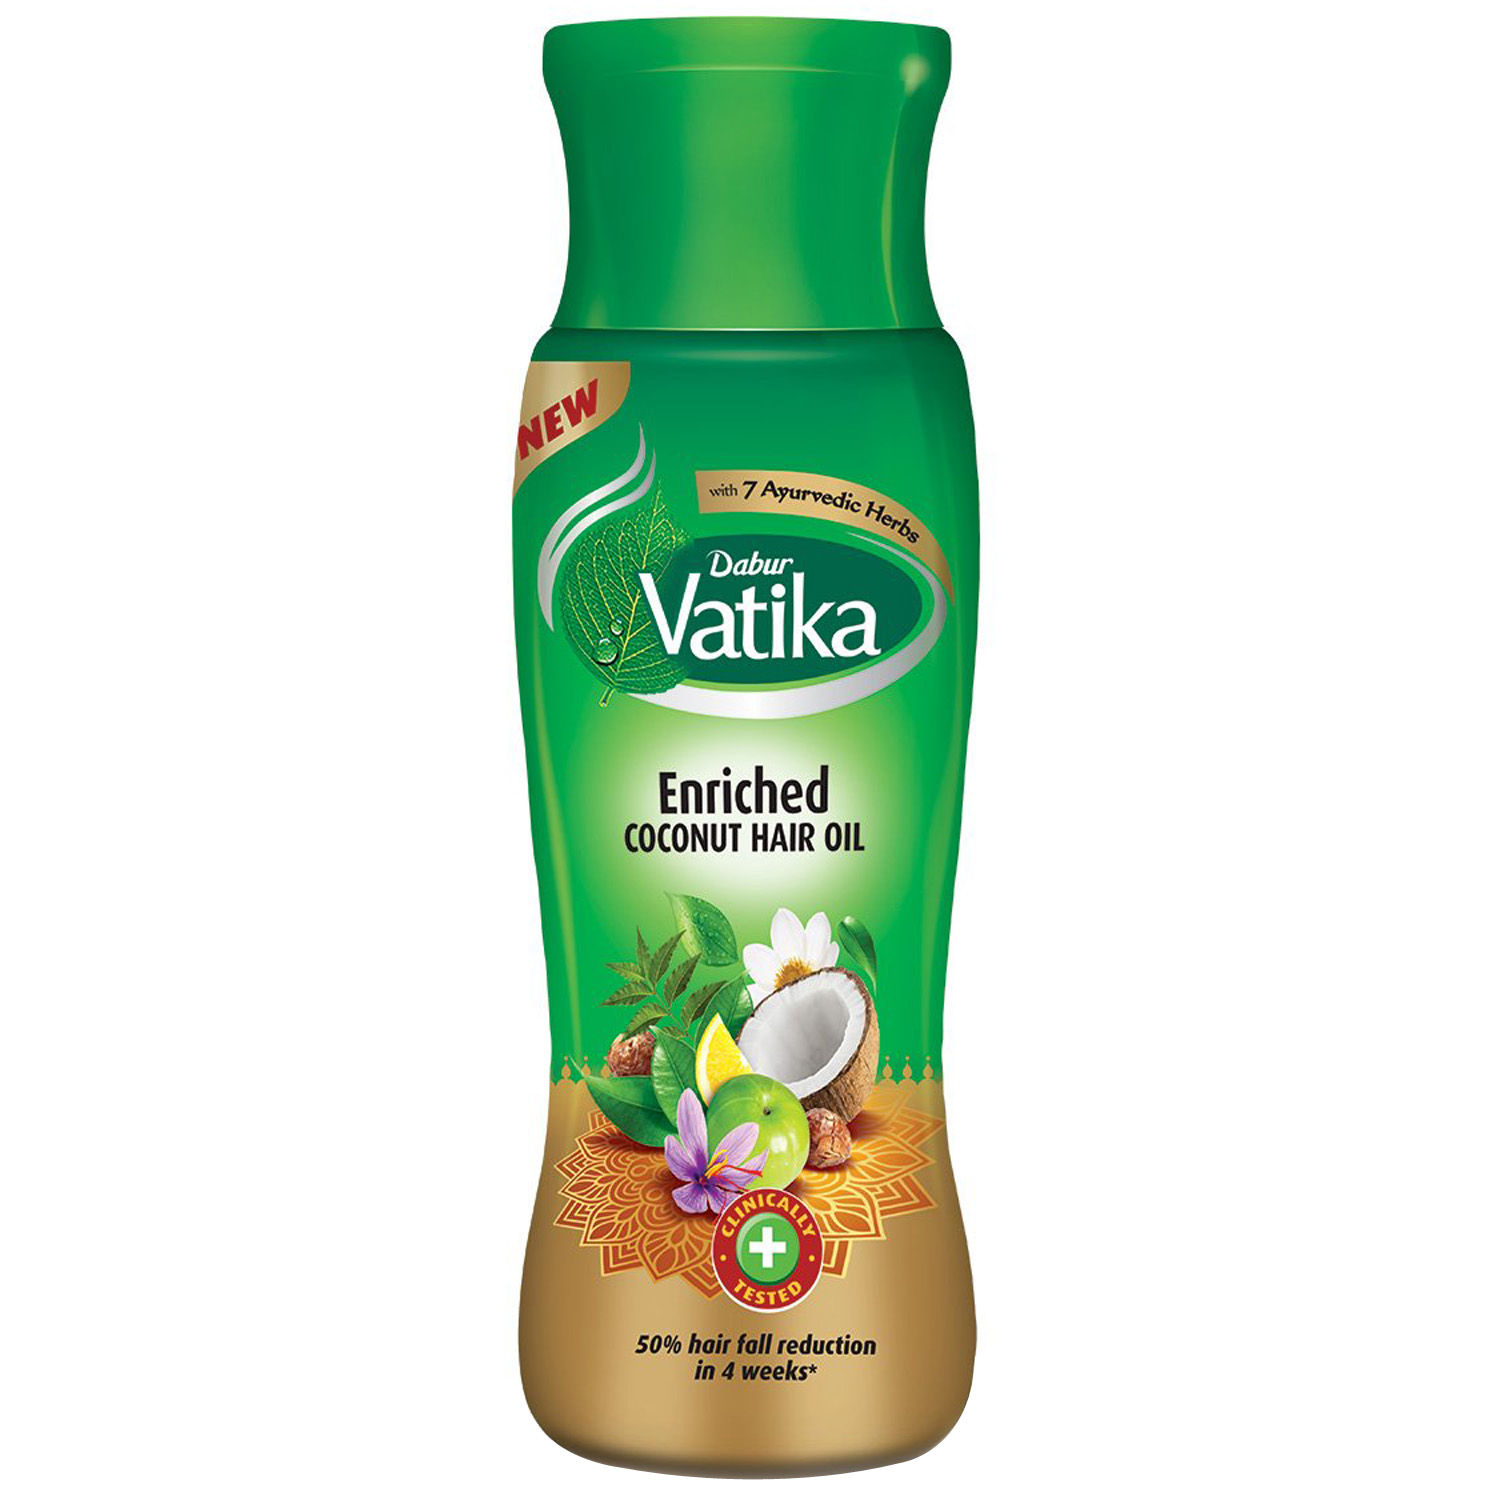 Vatika Enriched Coconut Hair Oil, 75 ml, Pack of 1 